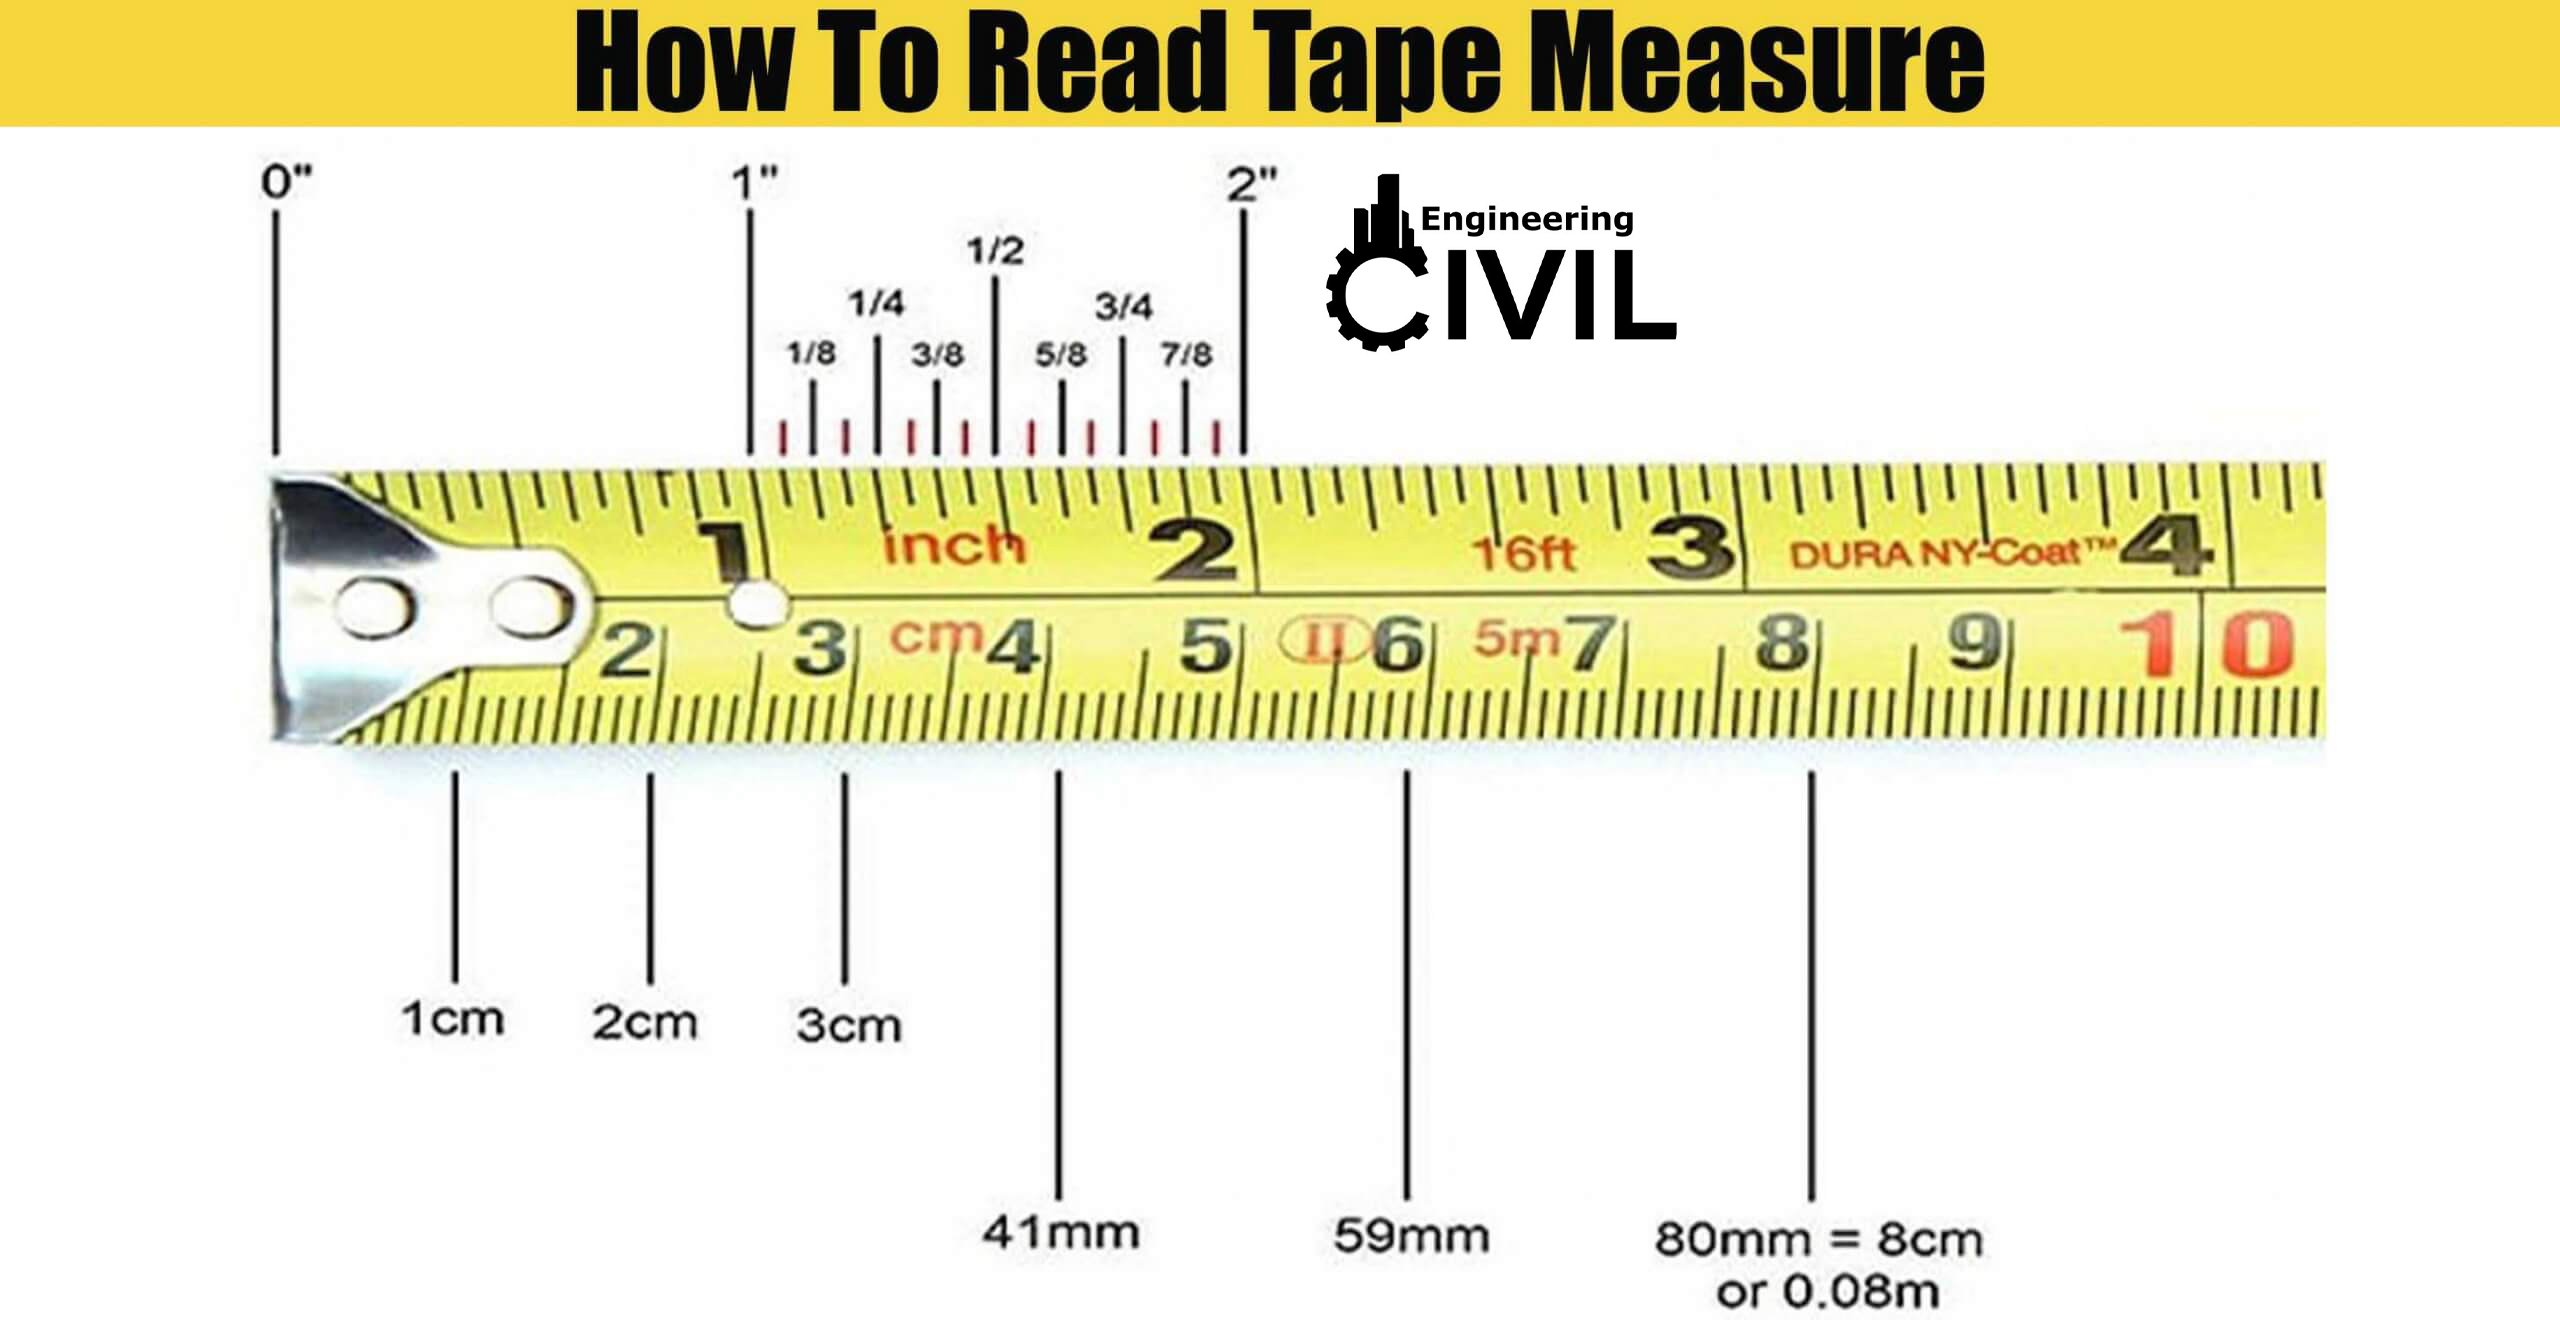 Landing strip tape measure